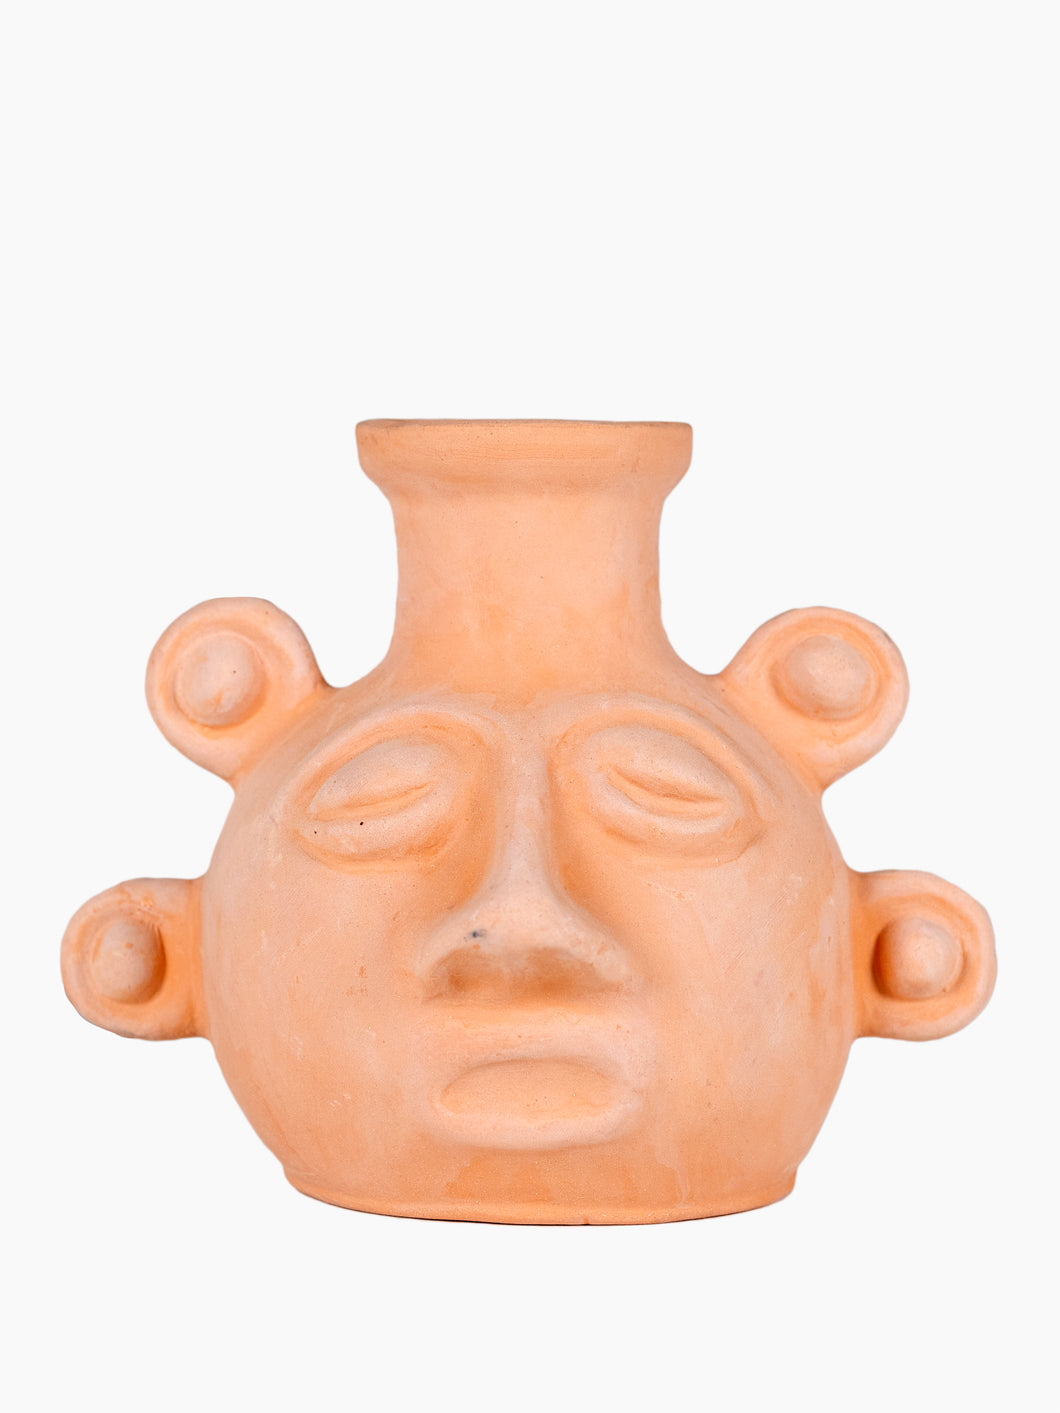 Incas Terracotta Sculpture